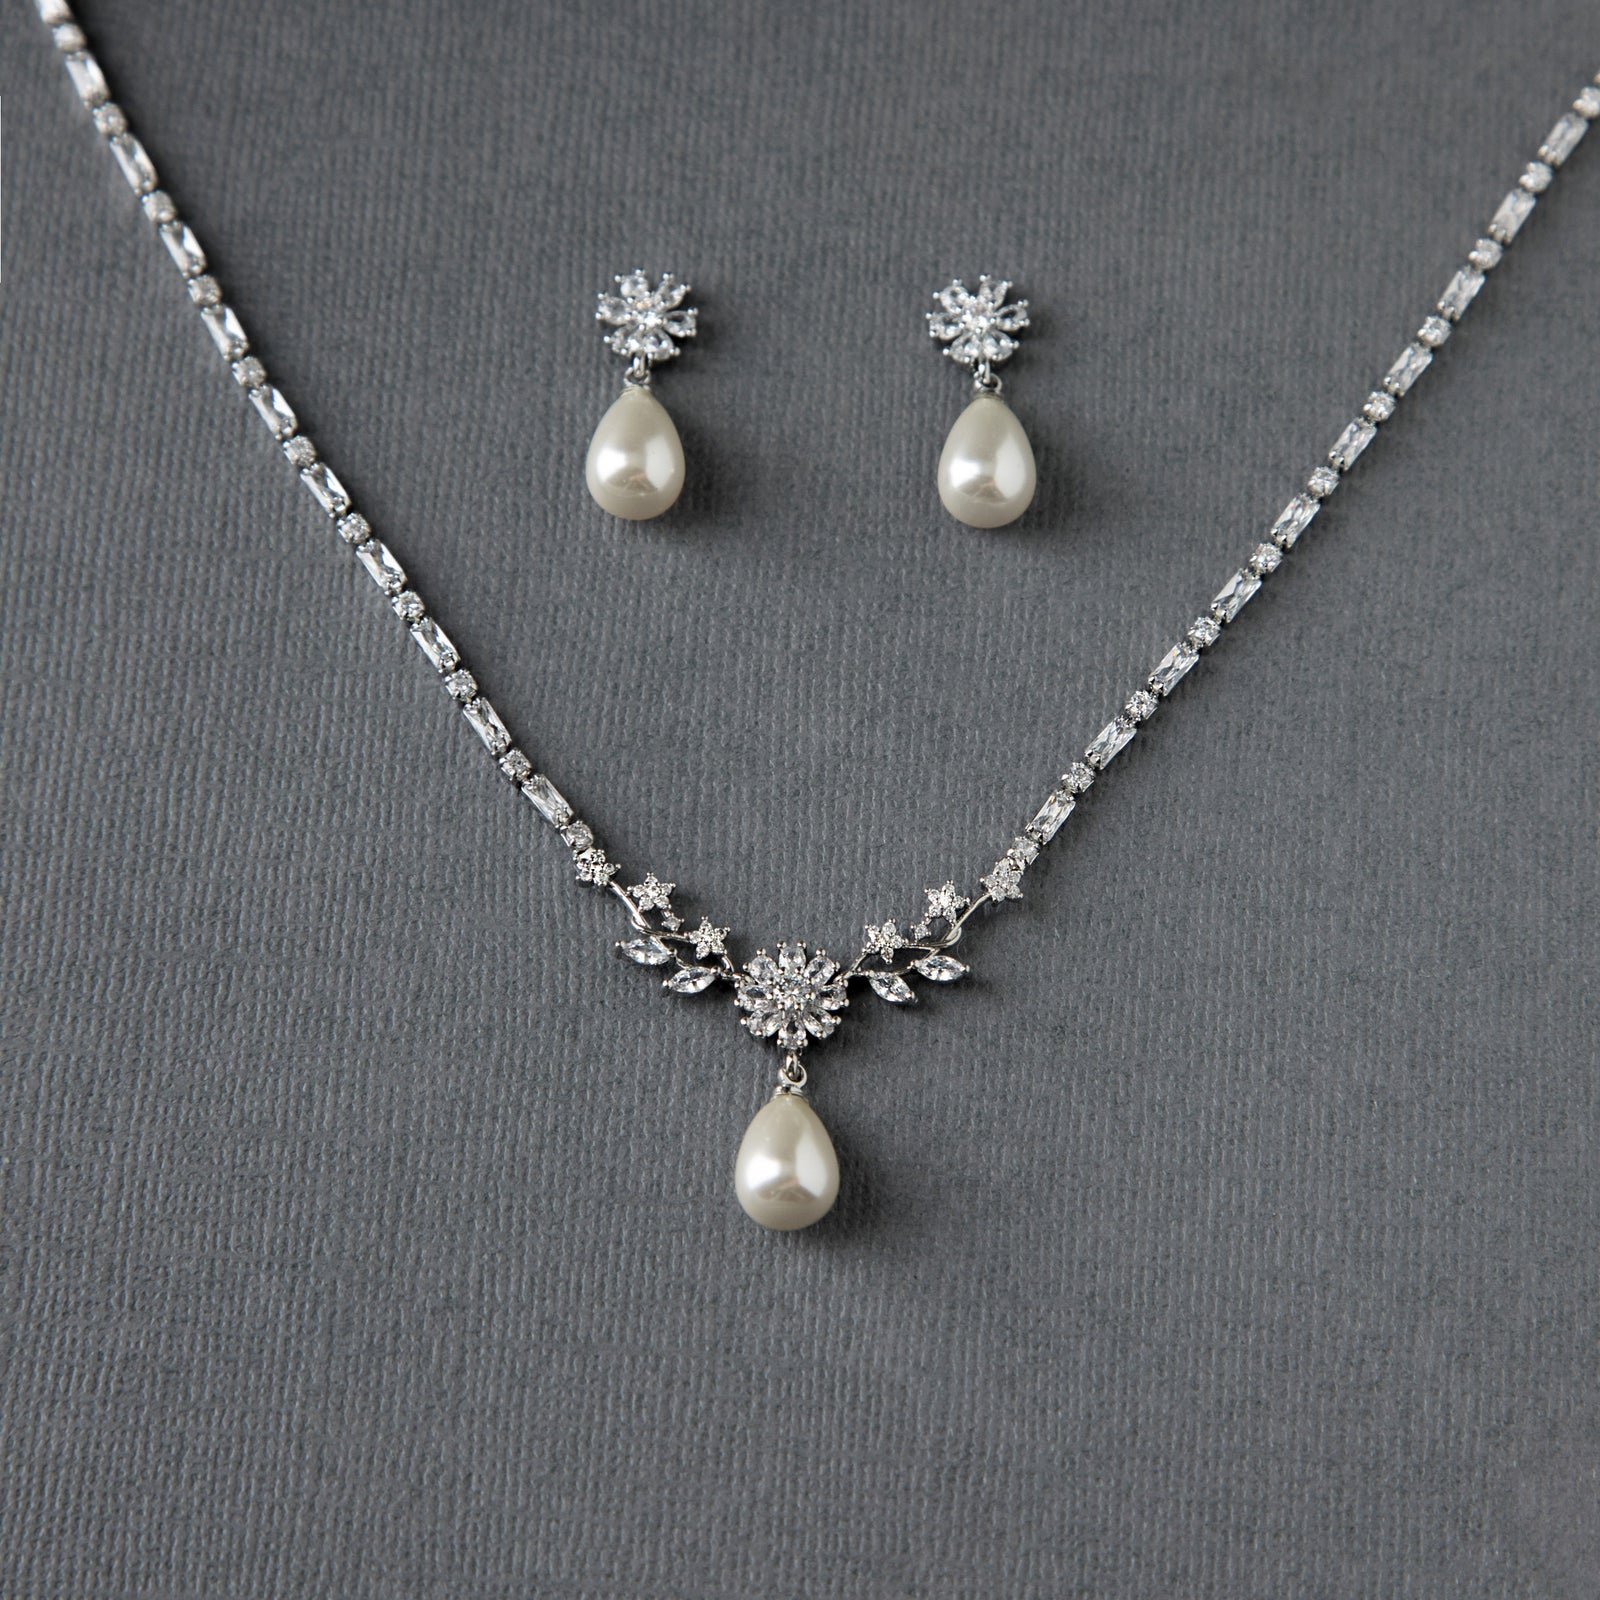 Baguette CZ Necklace Set with Ivory Teardrop Pearls - Cassandra Lynne